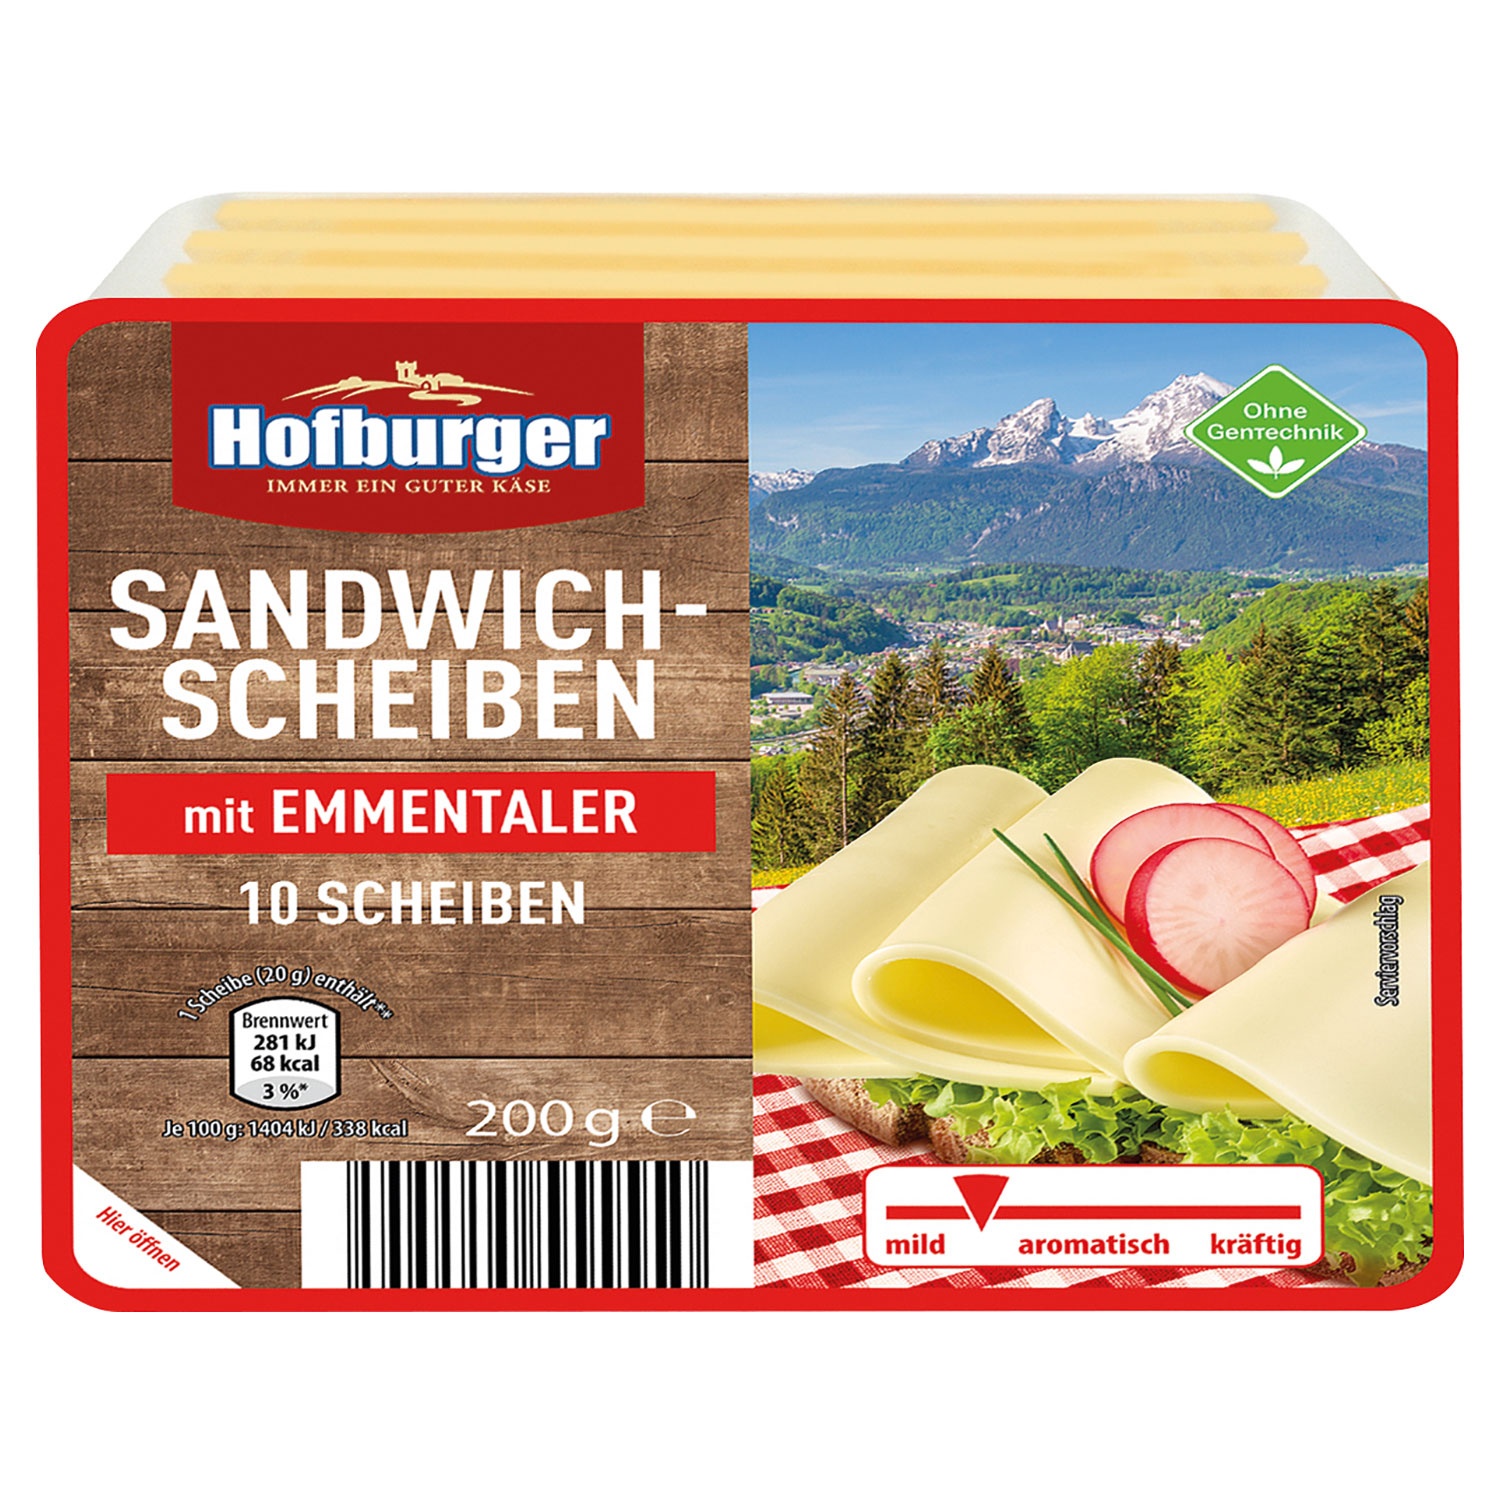 HOFBURGER Sandwich-Scheiben 200 g